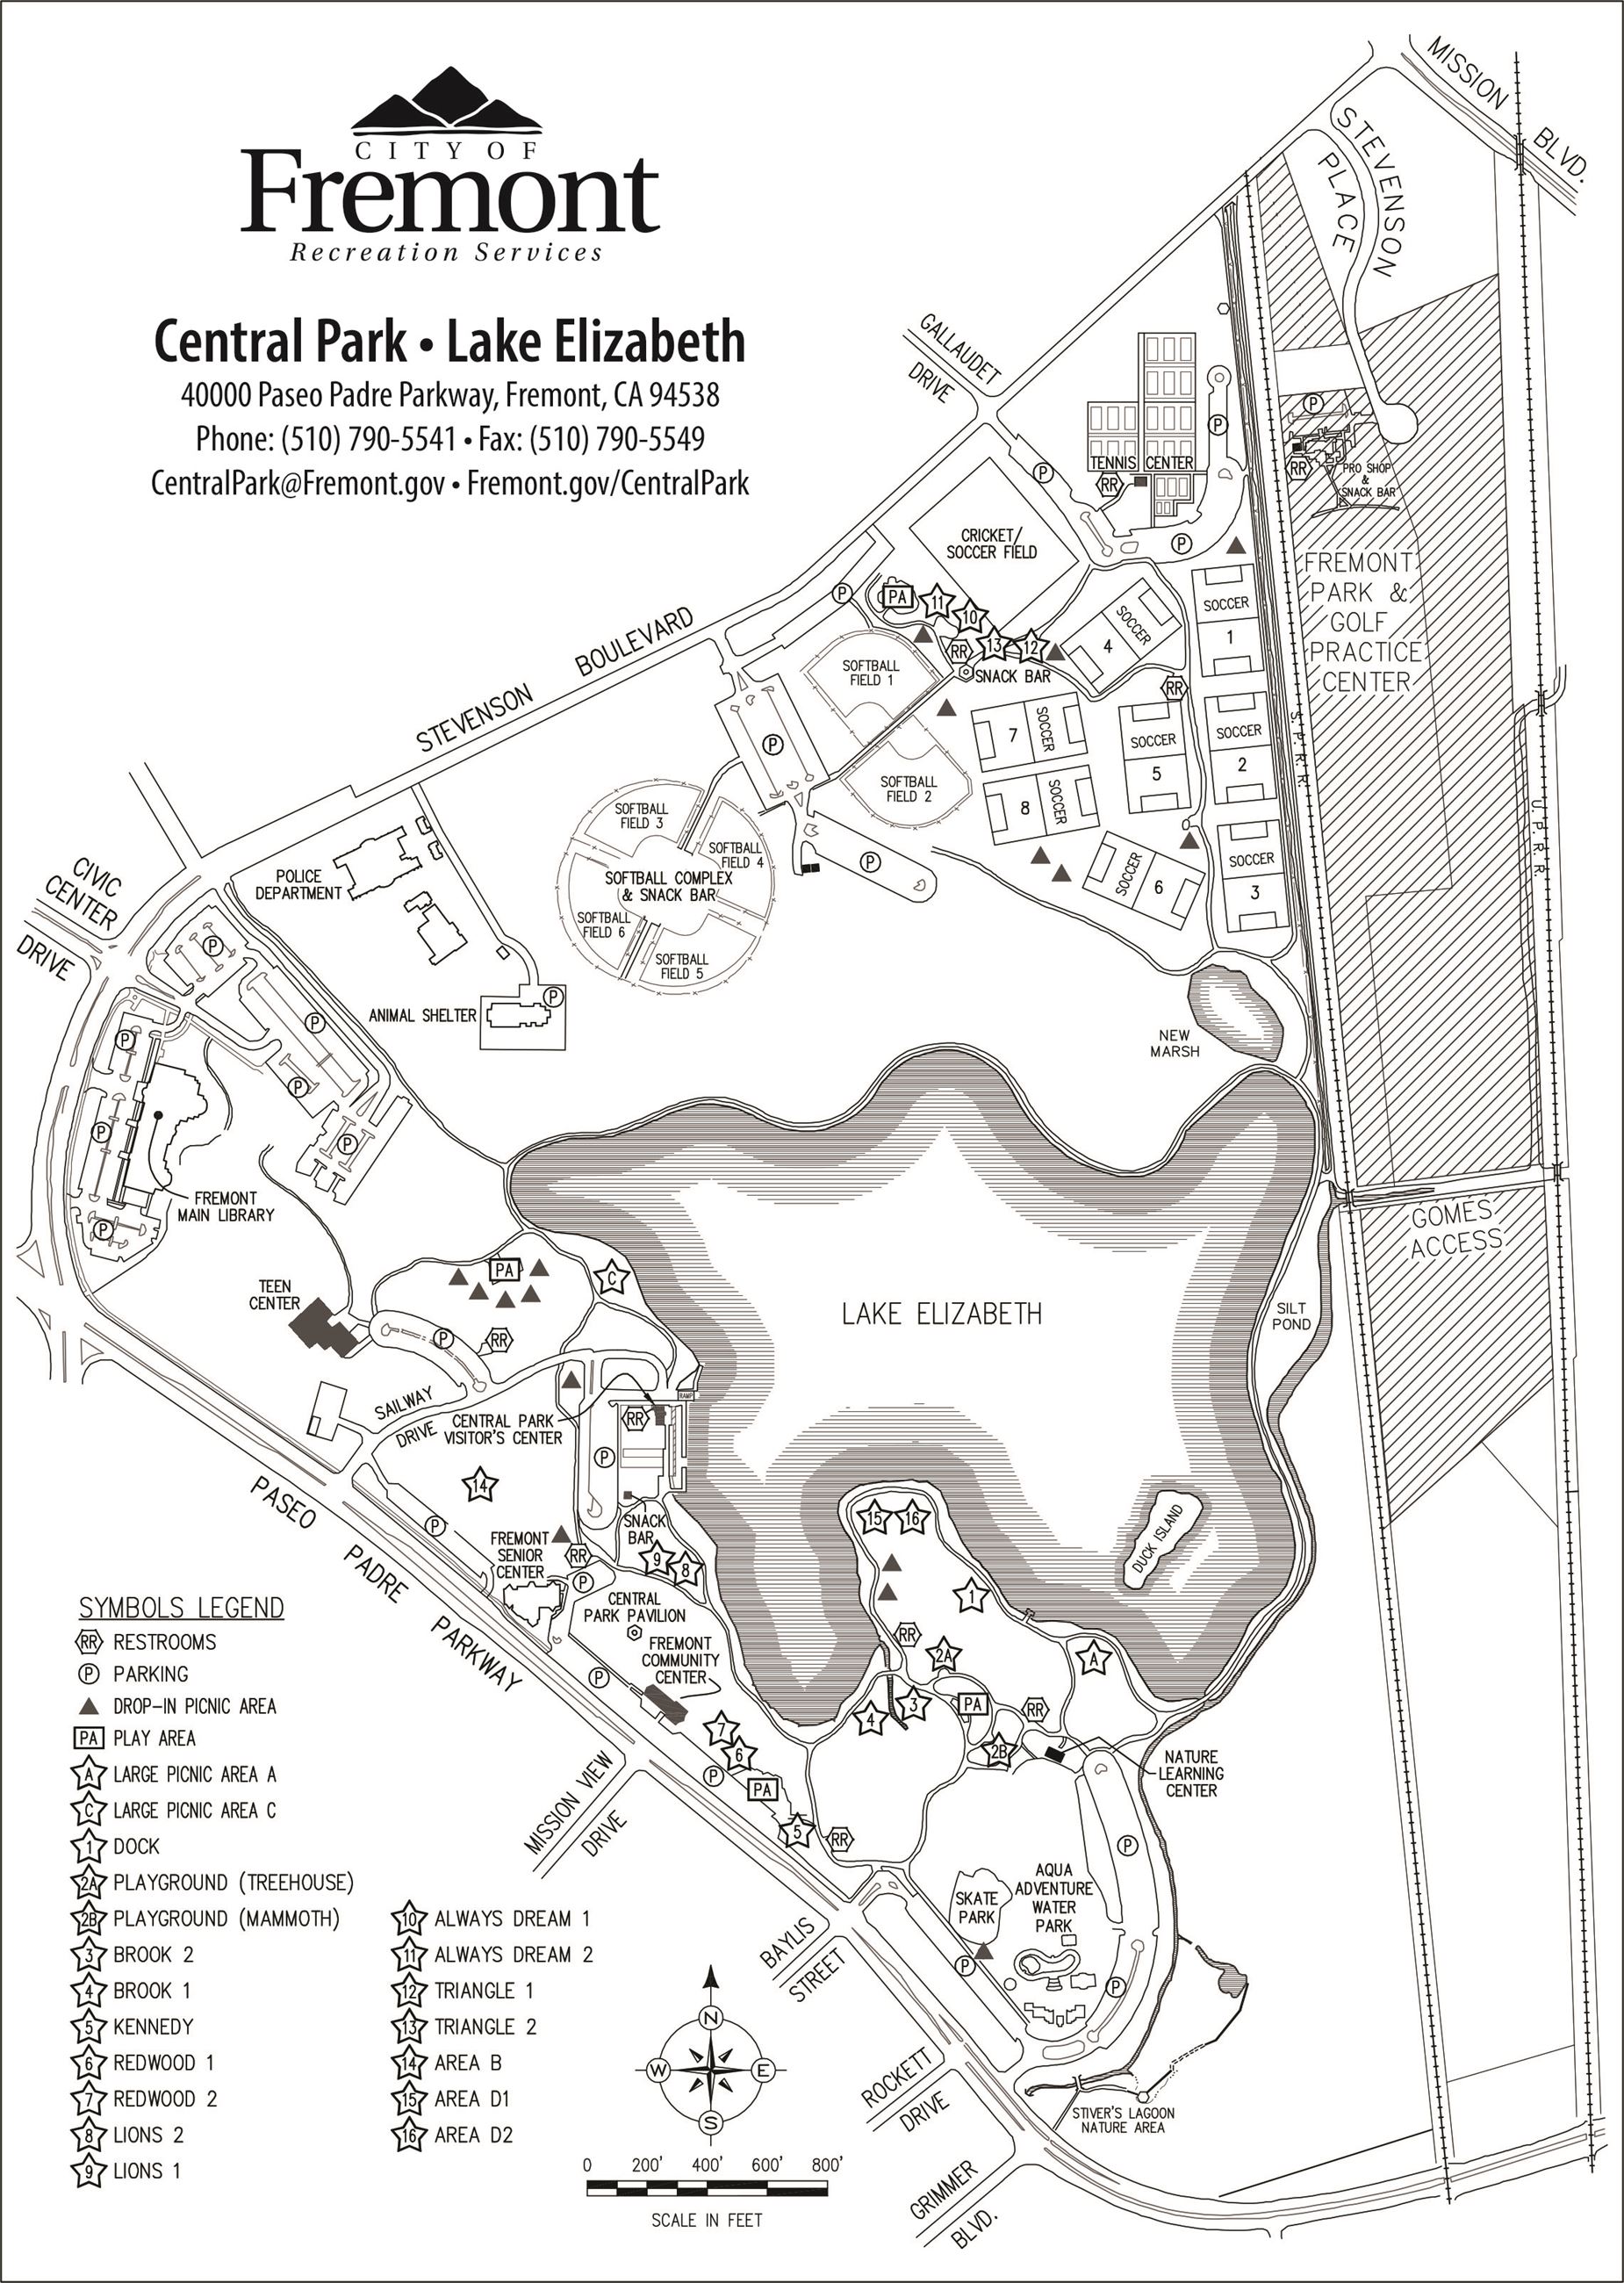 Dog Park Map